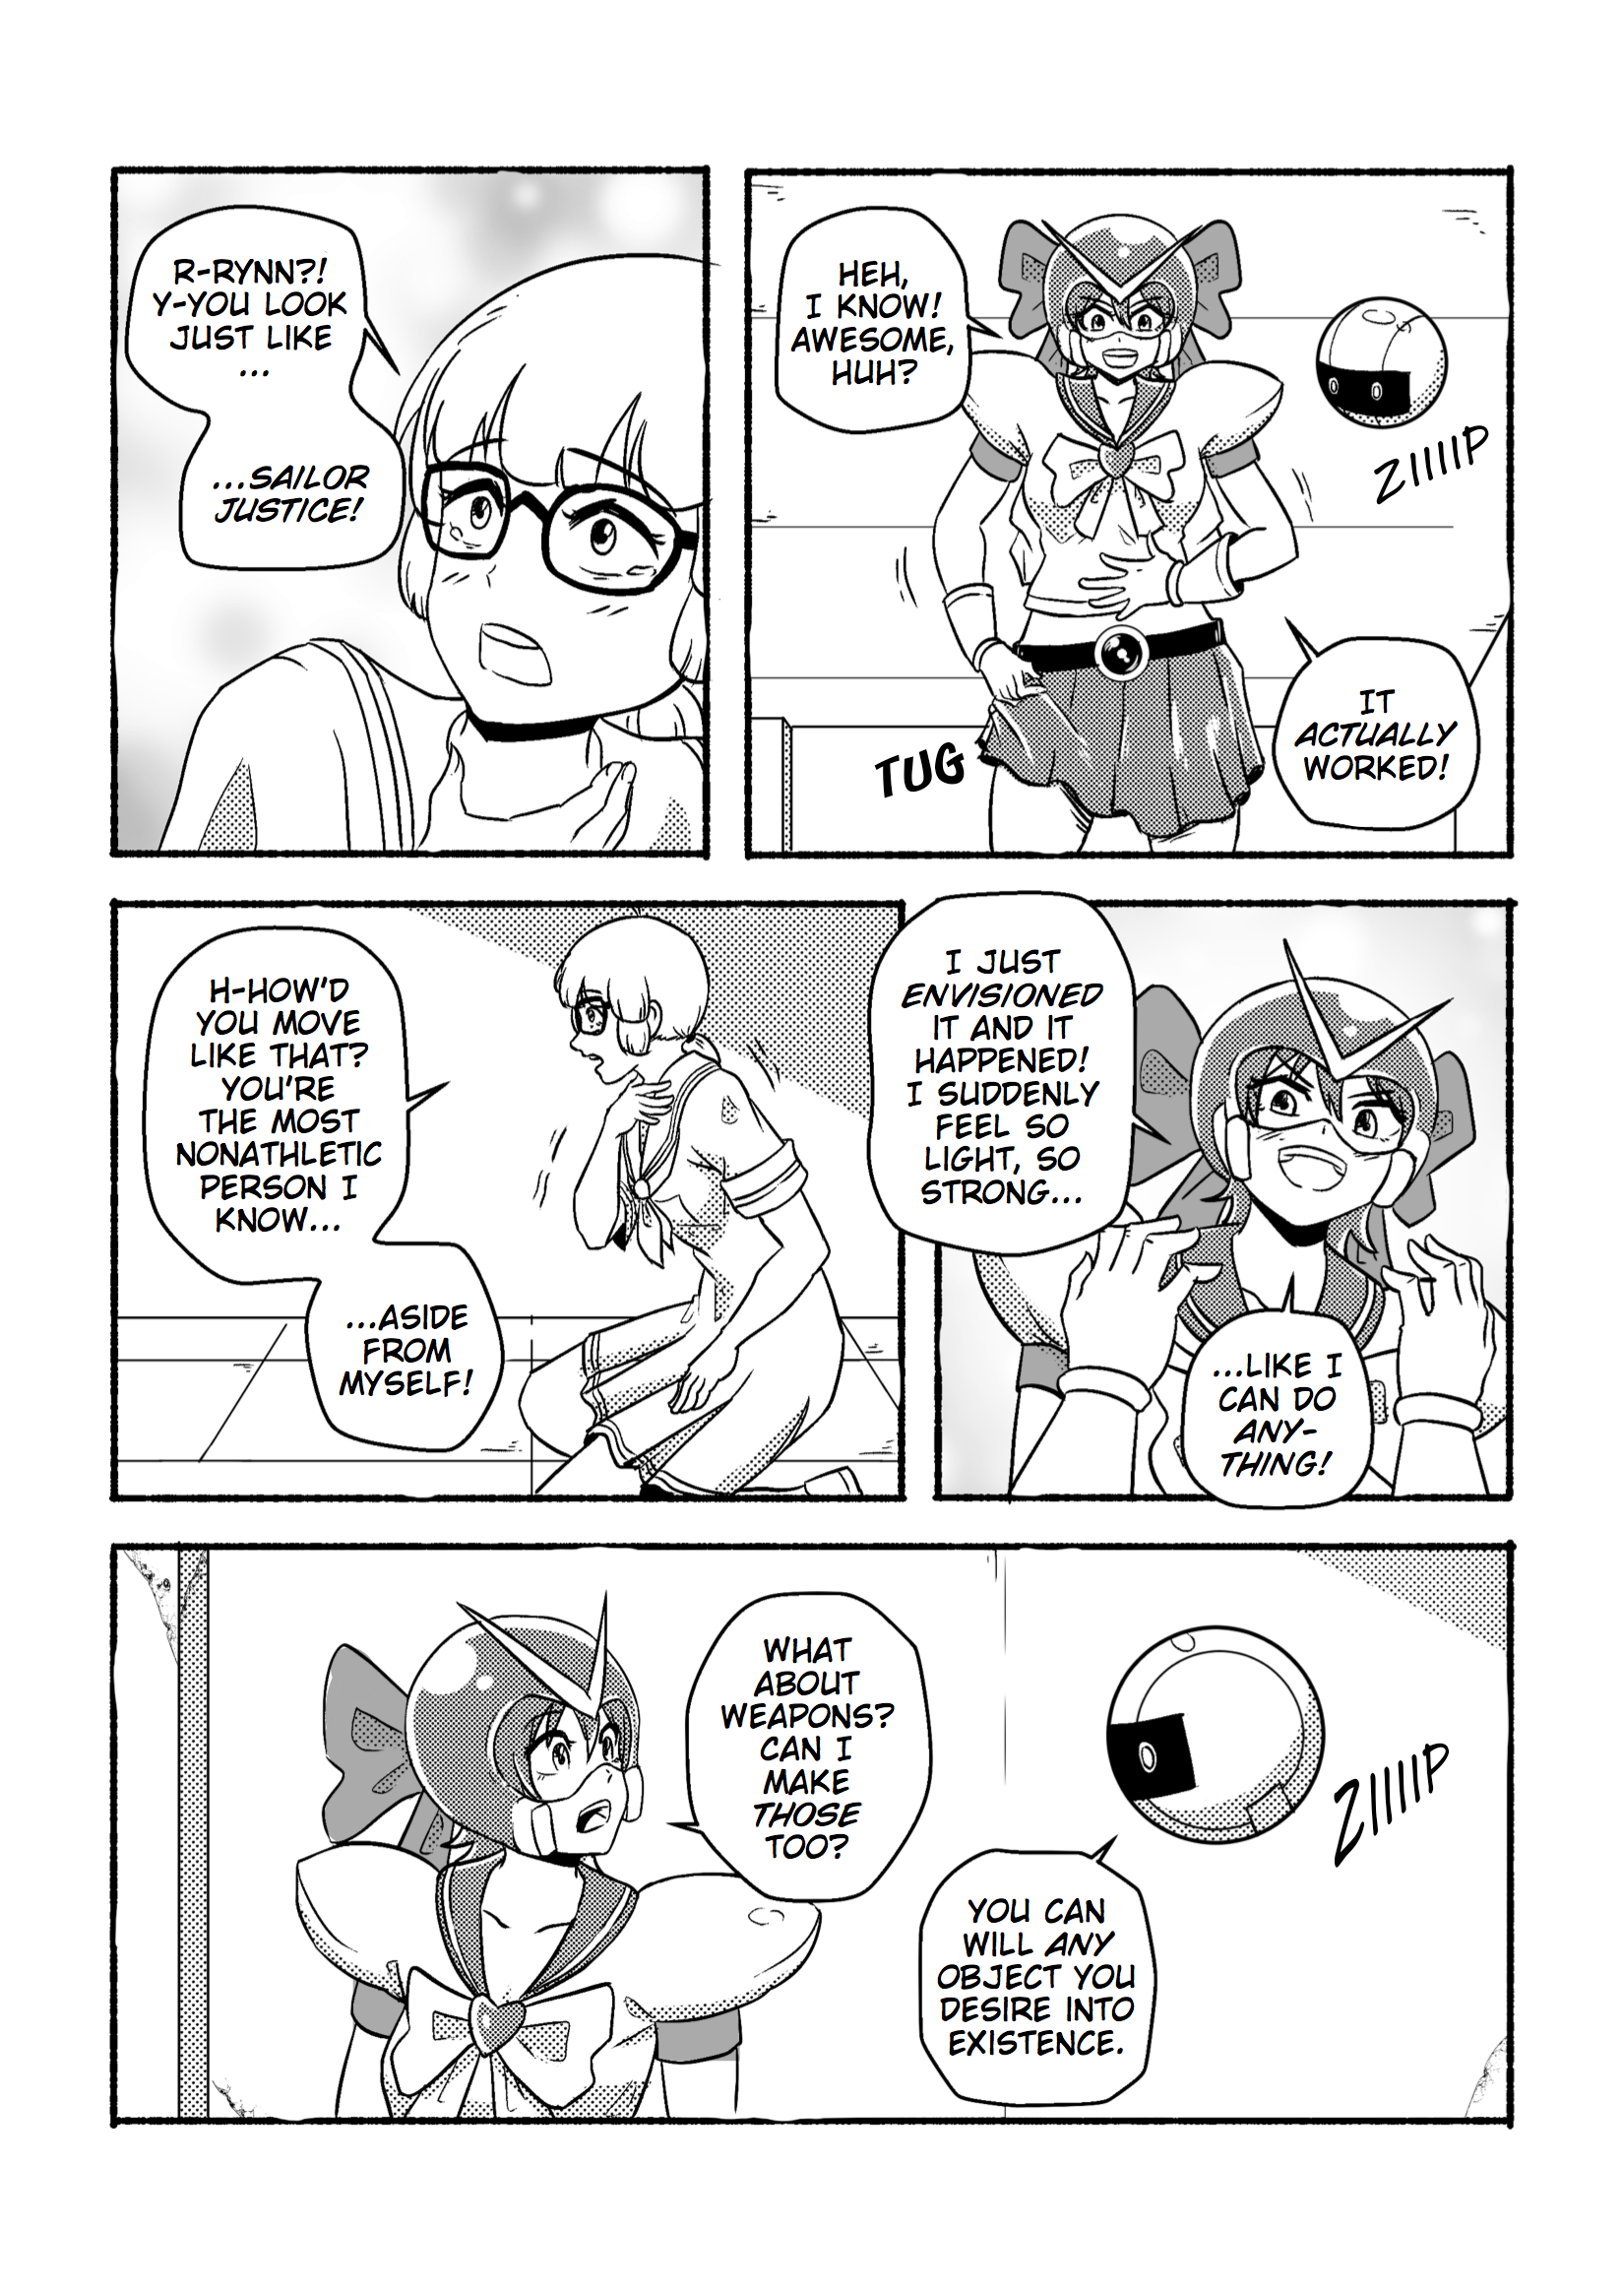 Sailor Justice, Page 32